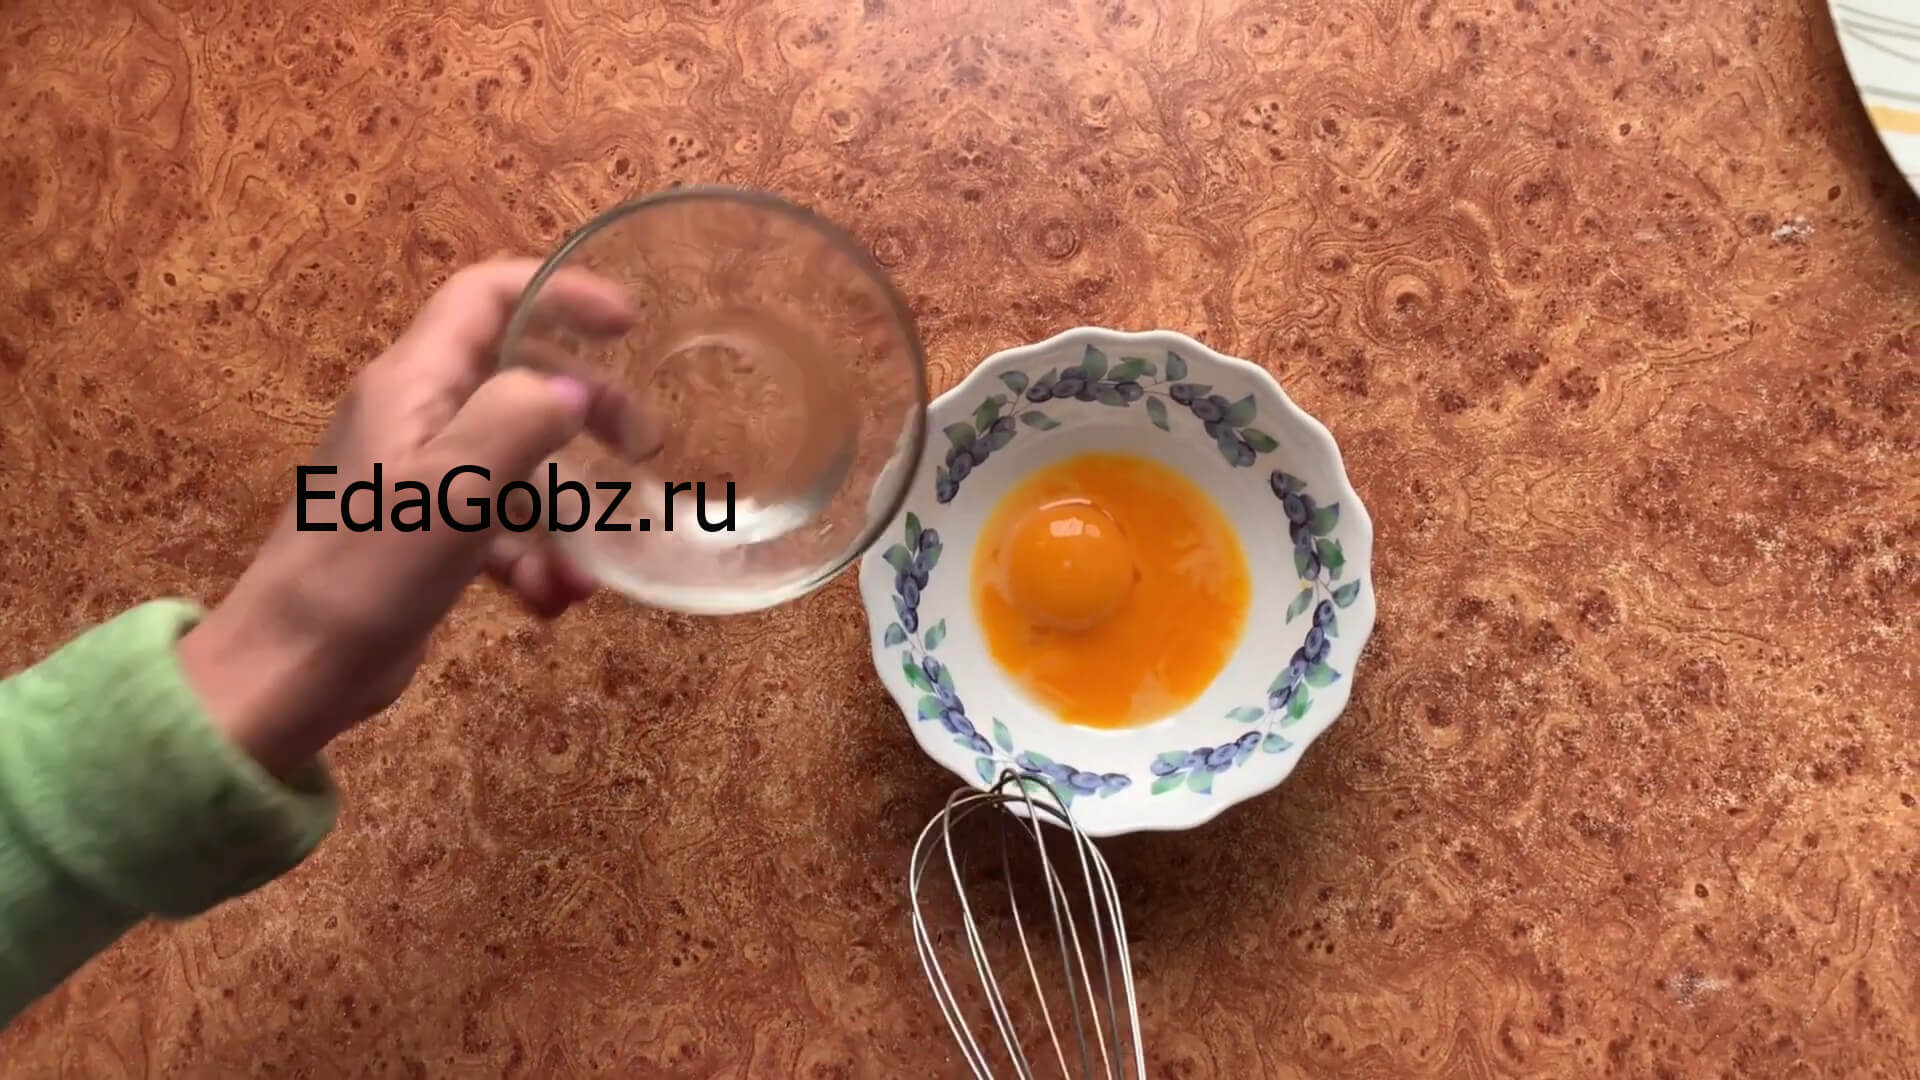 фото приготовления яиц